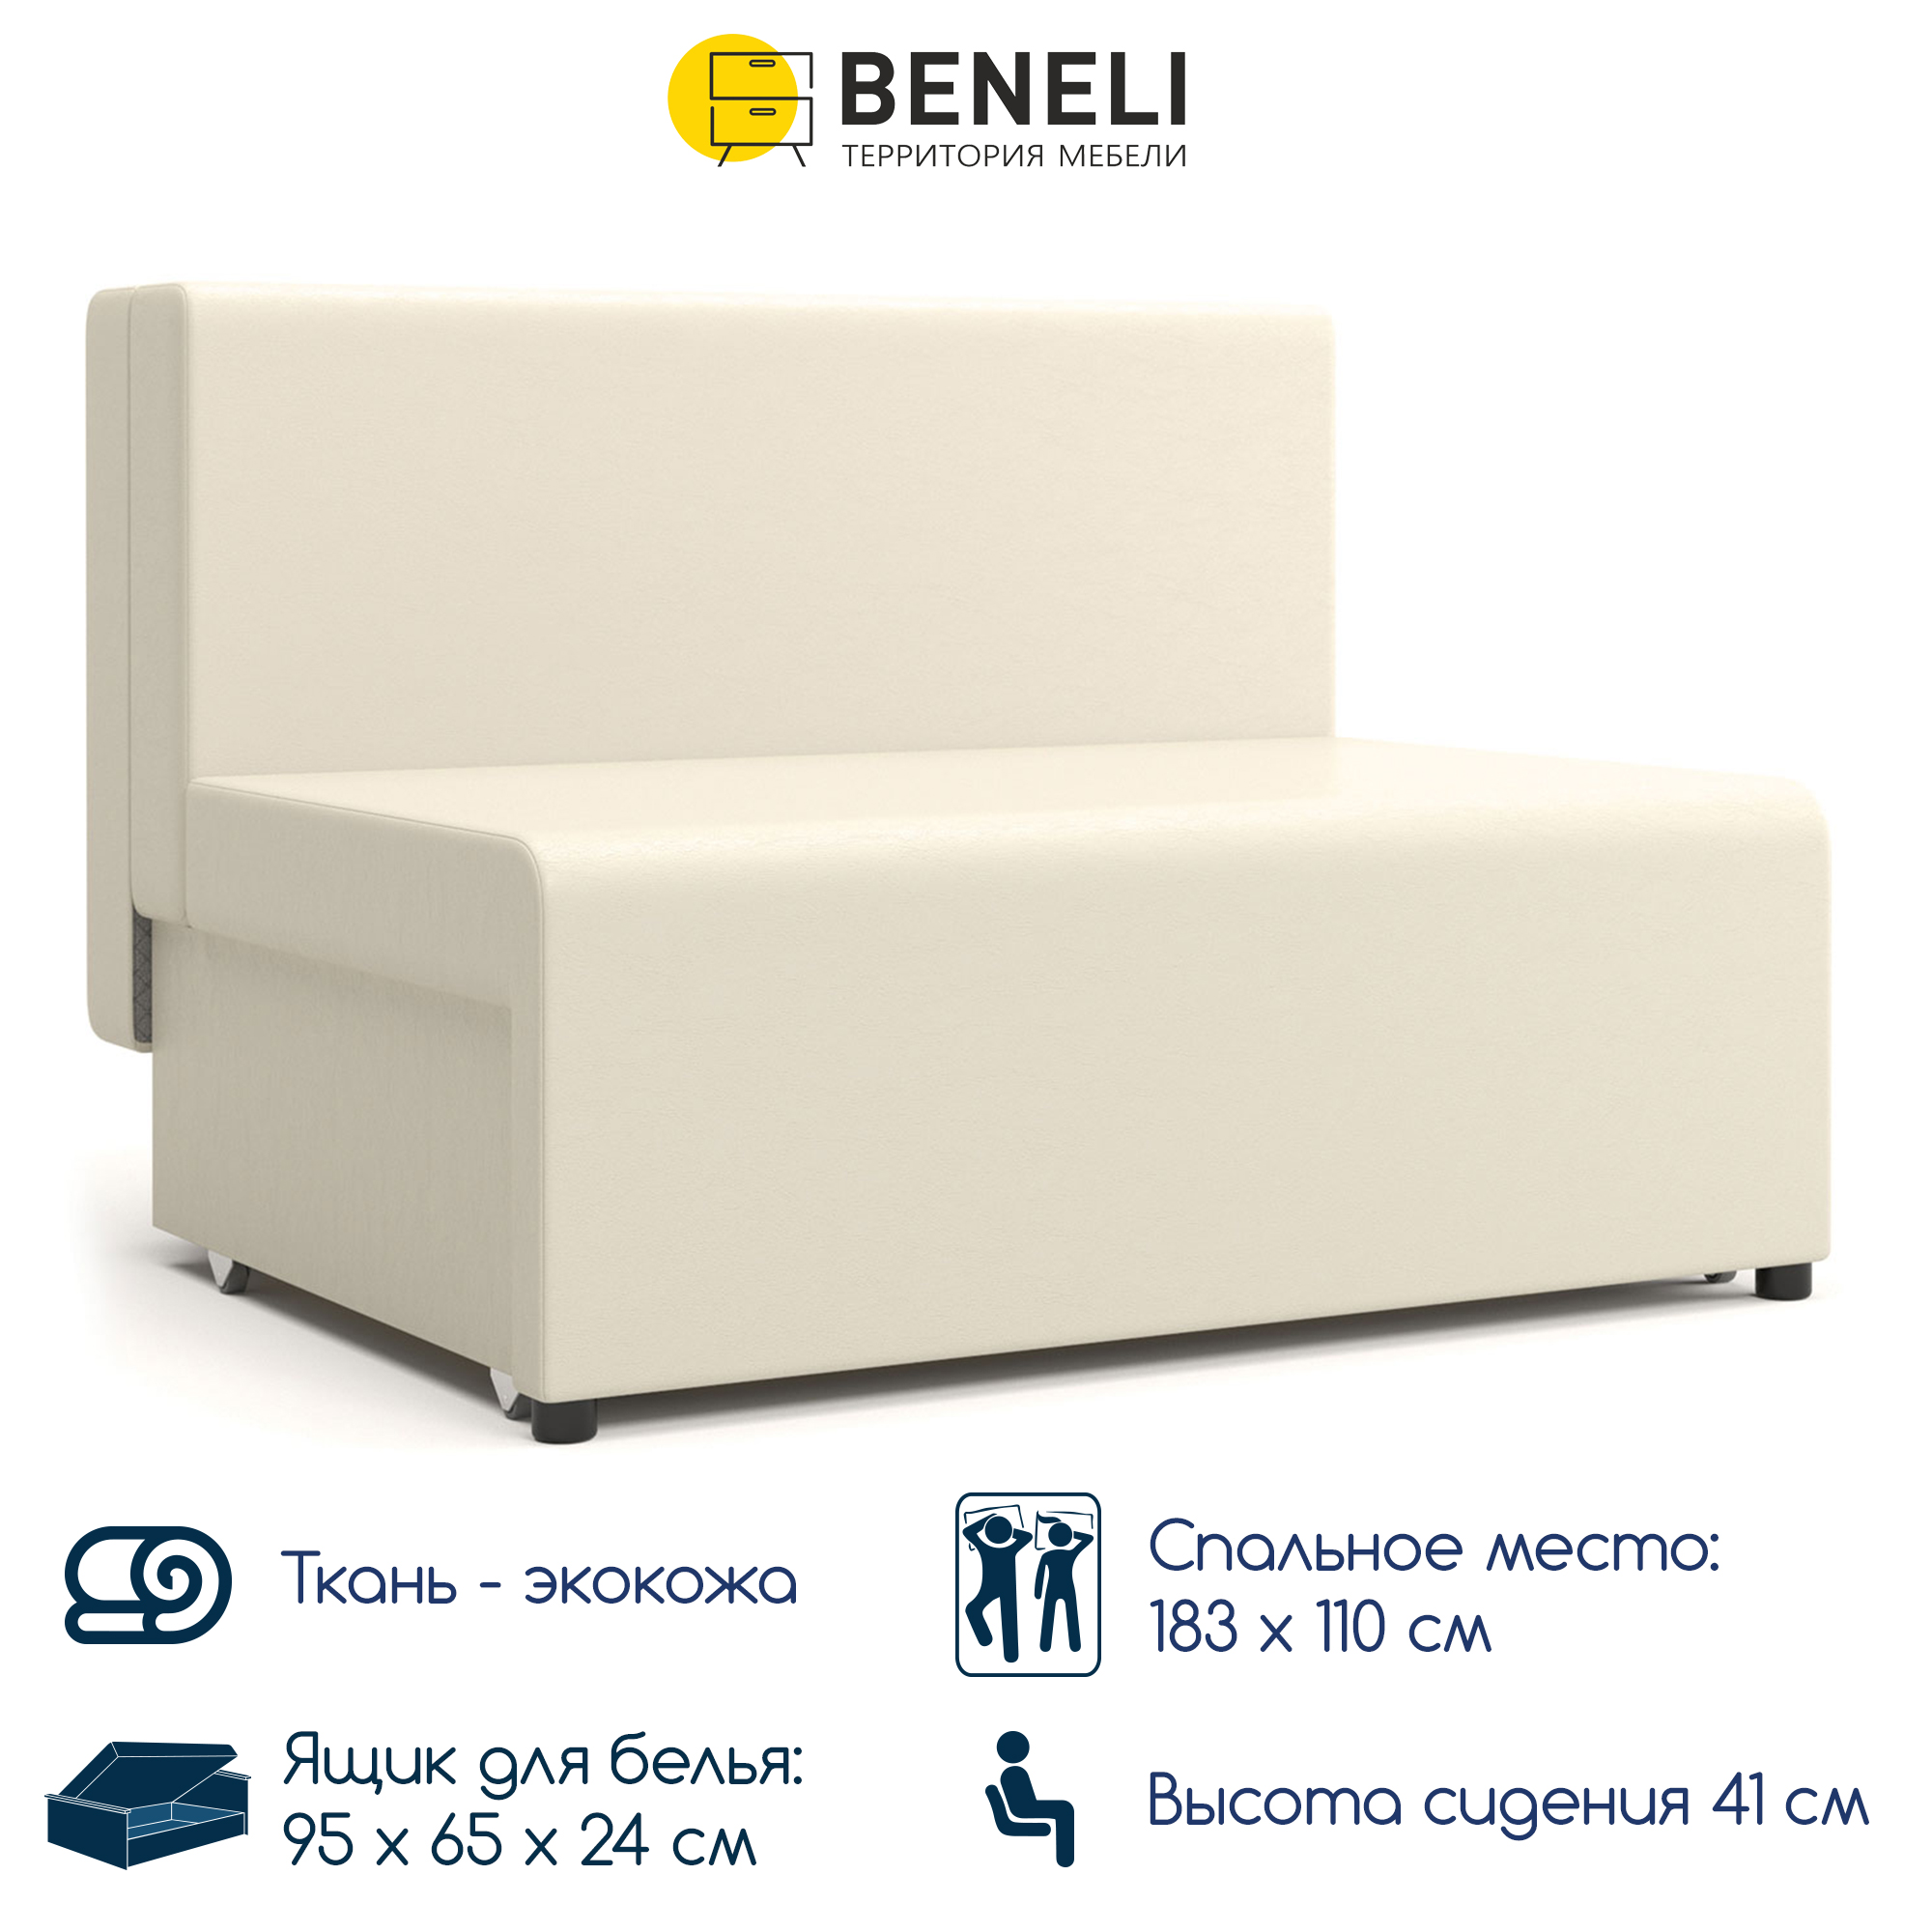 Детский диван-кровать Beneli Твинго, 110х92х82 см - купить в Beneli, цена на Мегамаркет